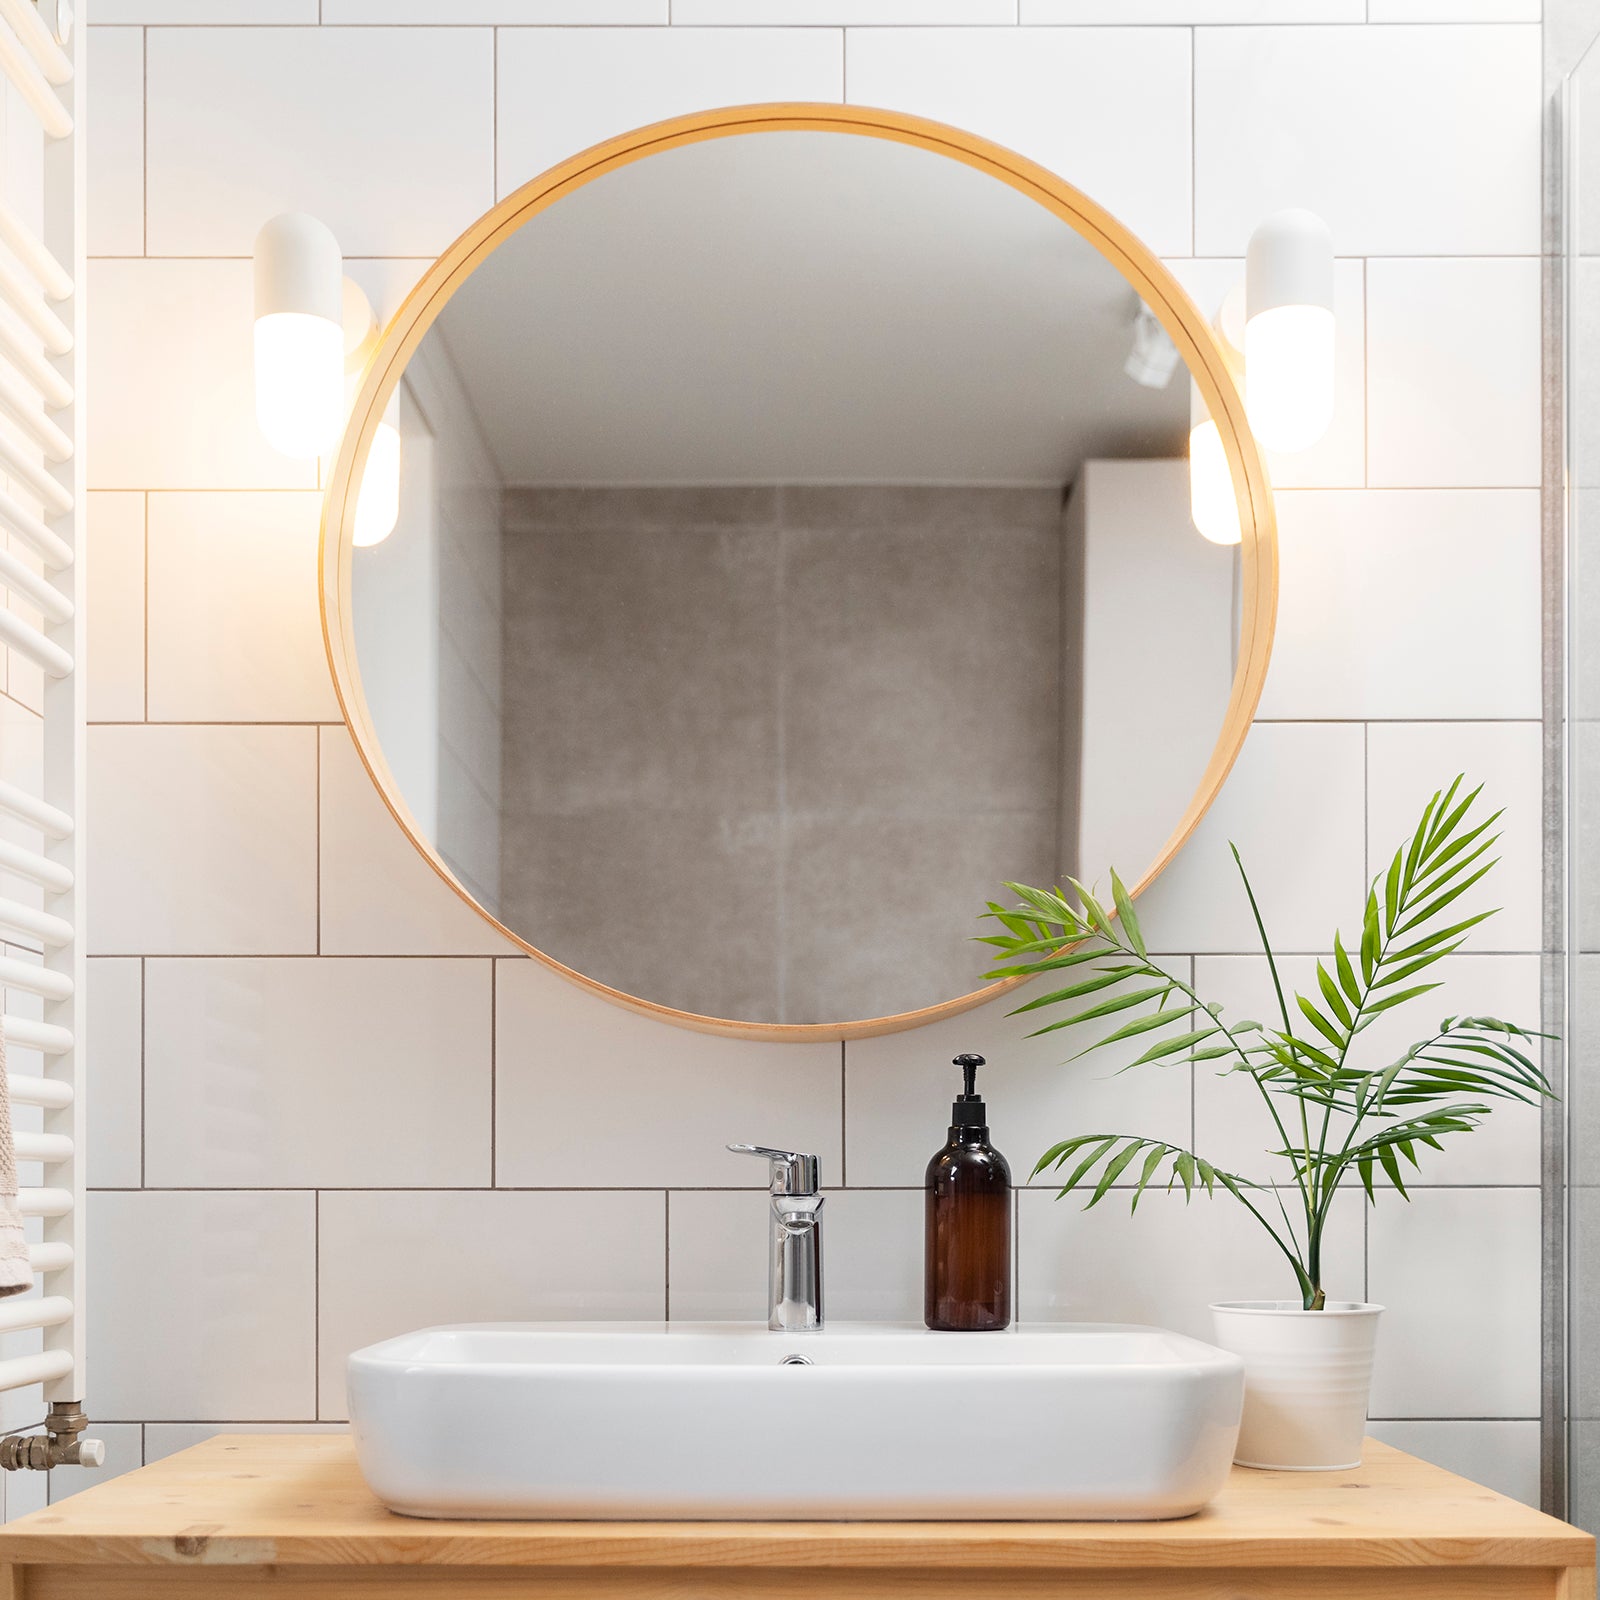 5 Tips about Bathroom Mirror Selection - Tangkula